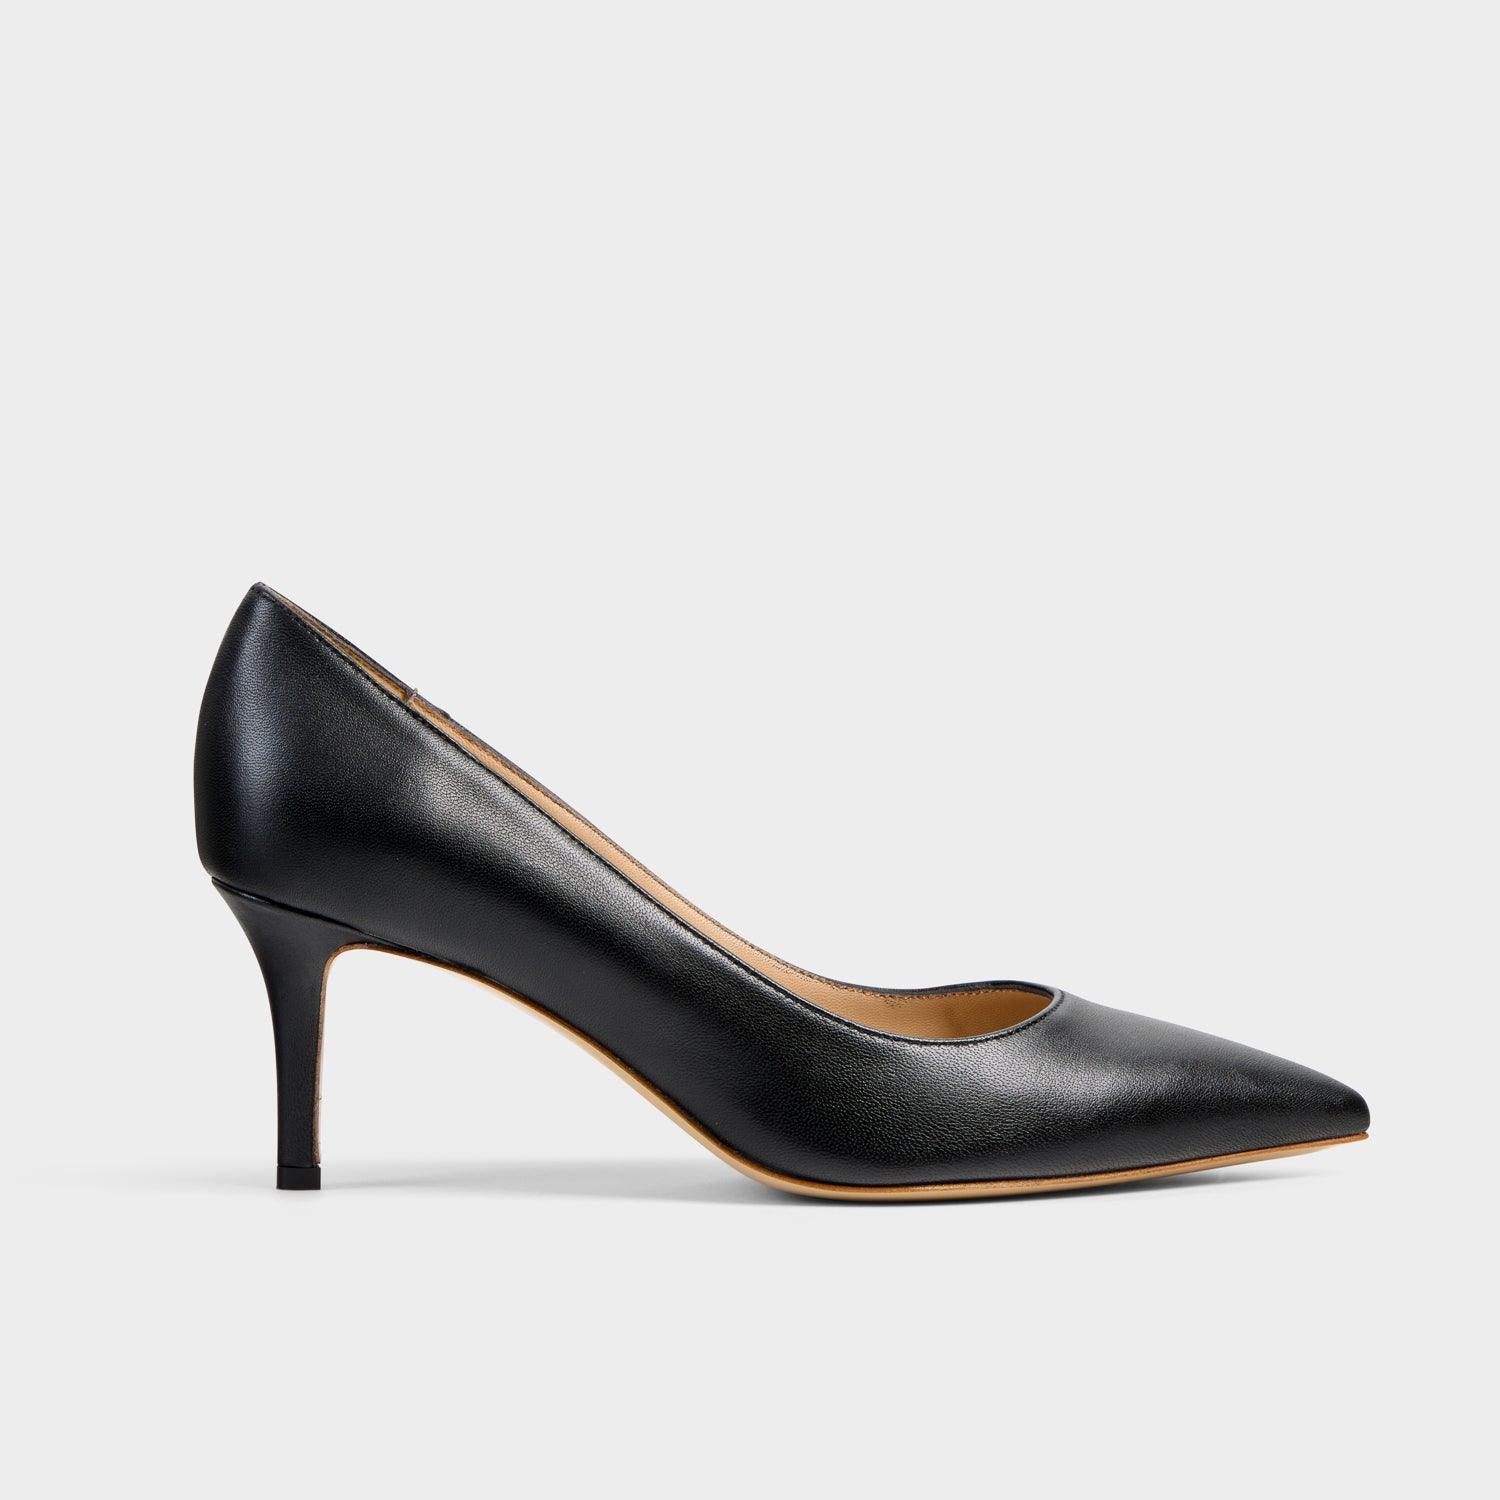 Milly black pump heel - MADE THE EDIT